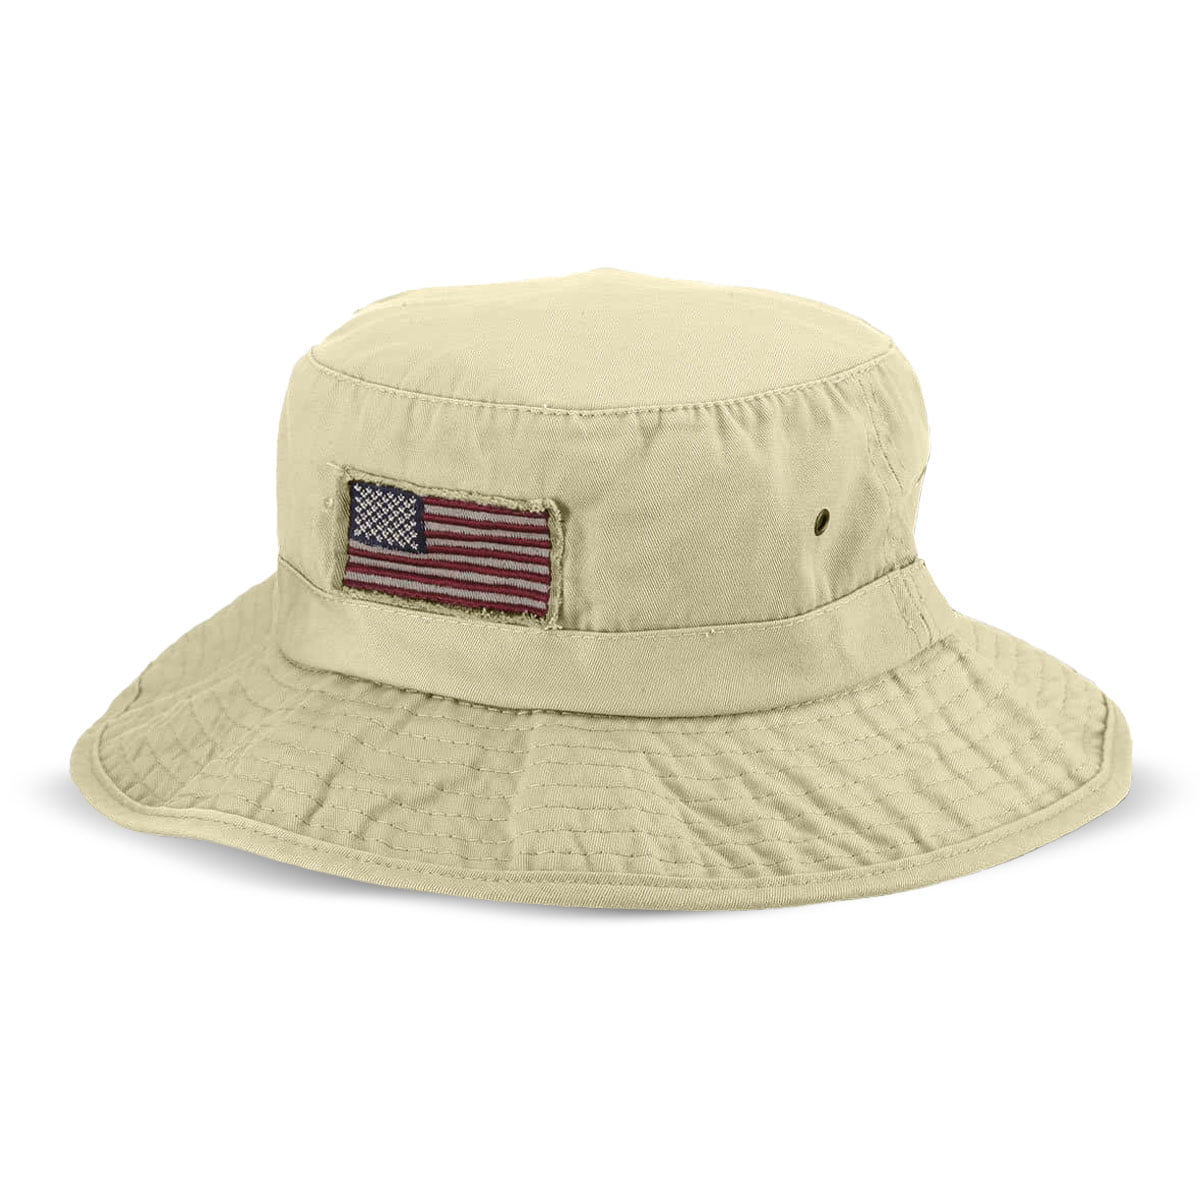 Size 6 3/4-7 1/2 Adjustable Khaki Brown CAP Neck SUN Cover Bucket Back UNISEX 